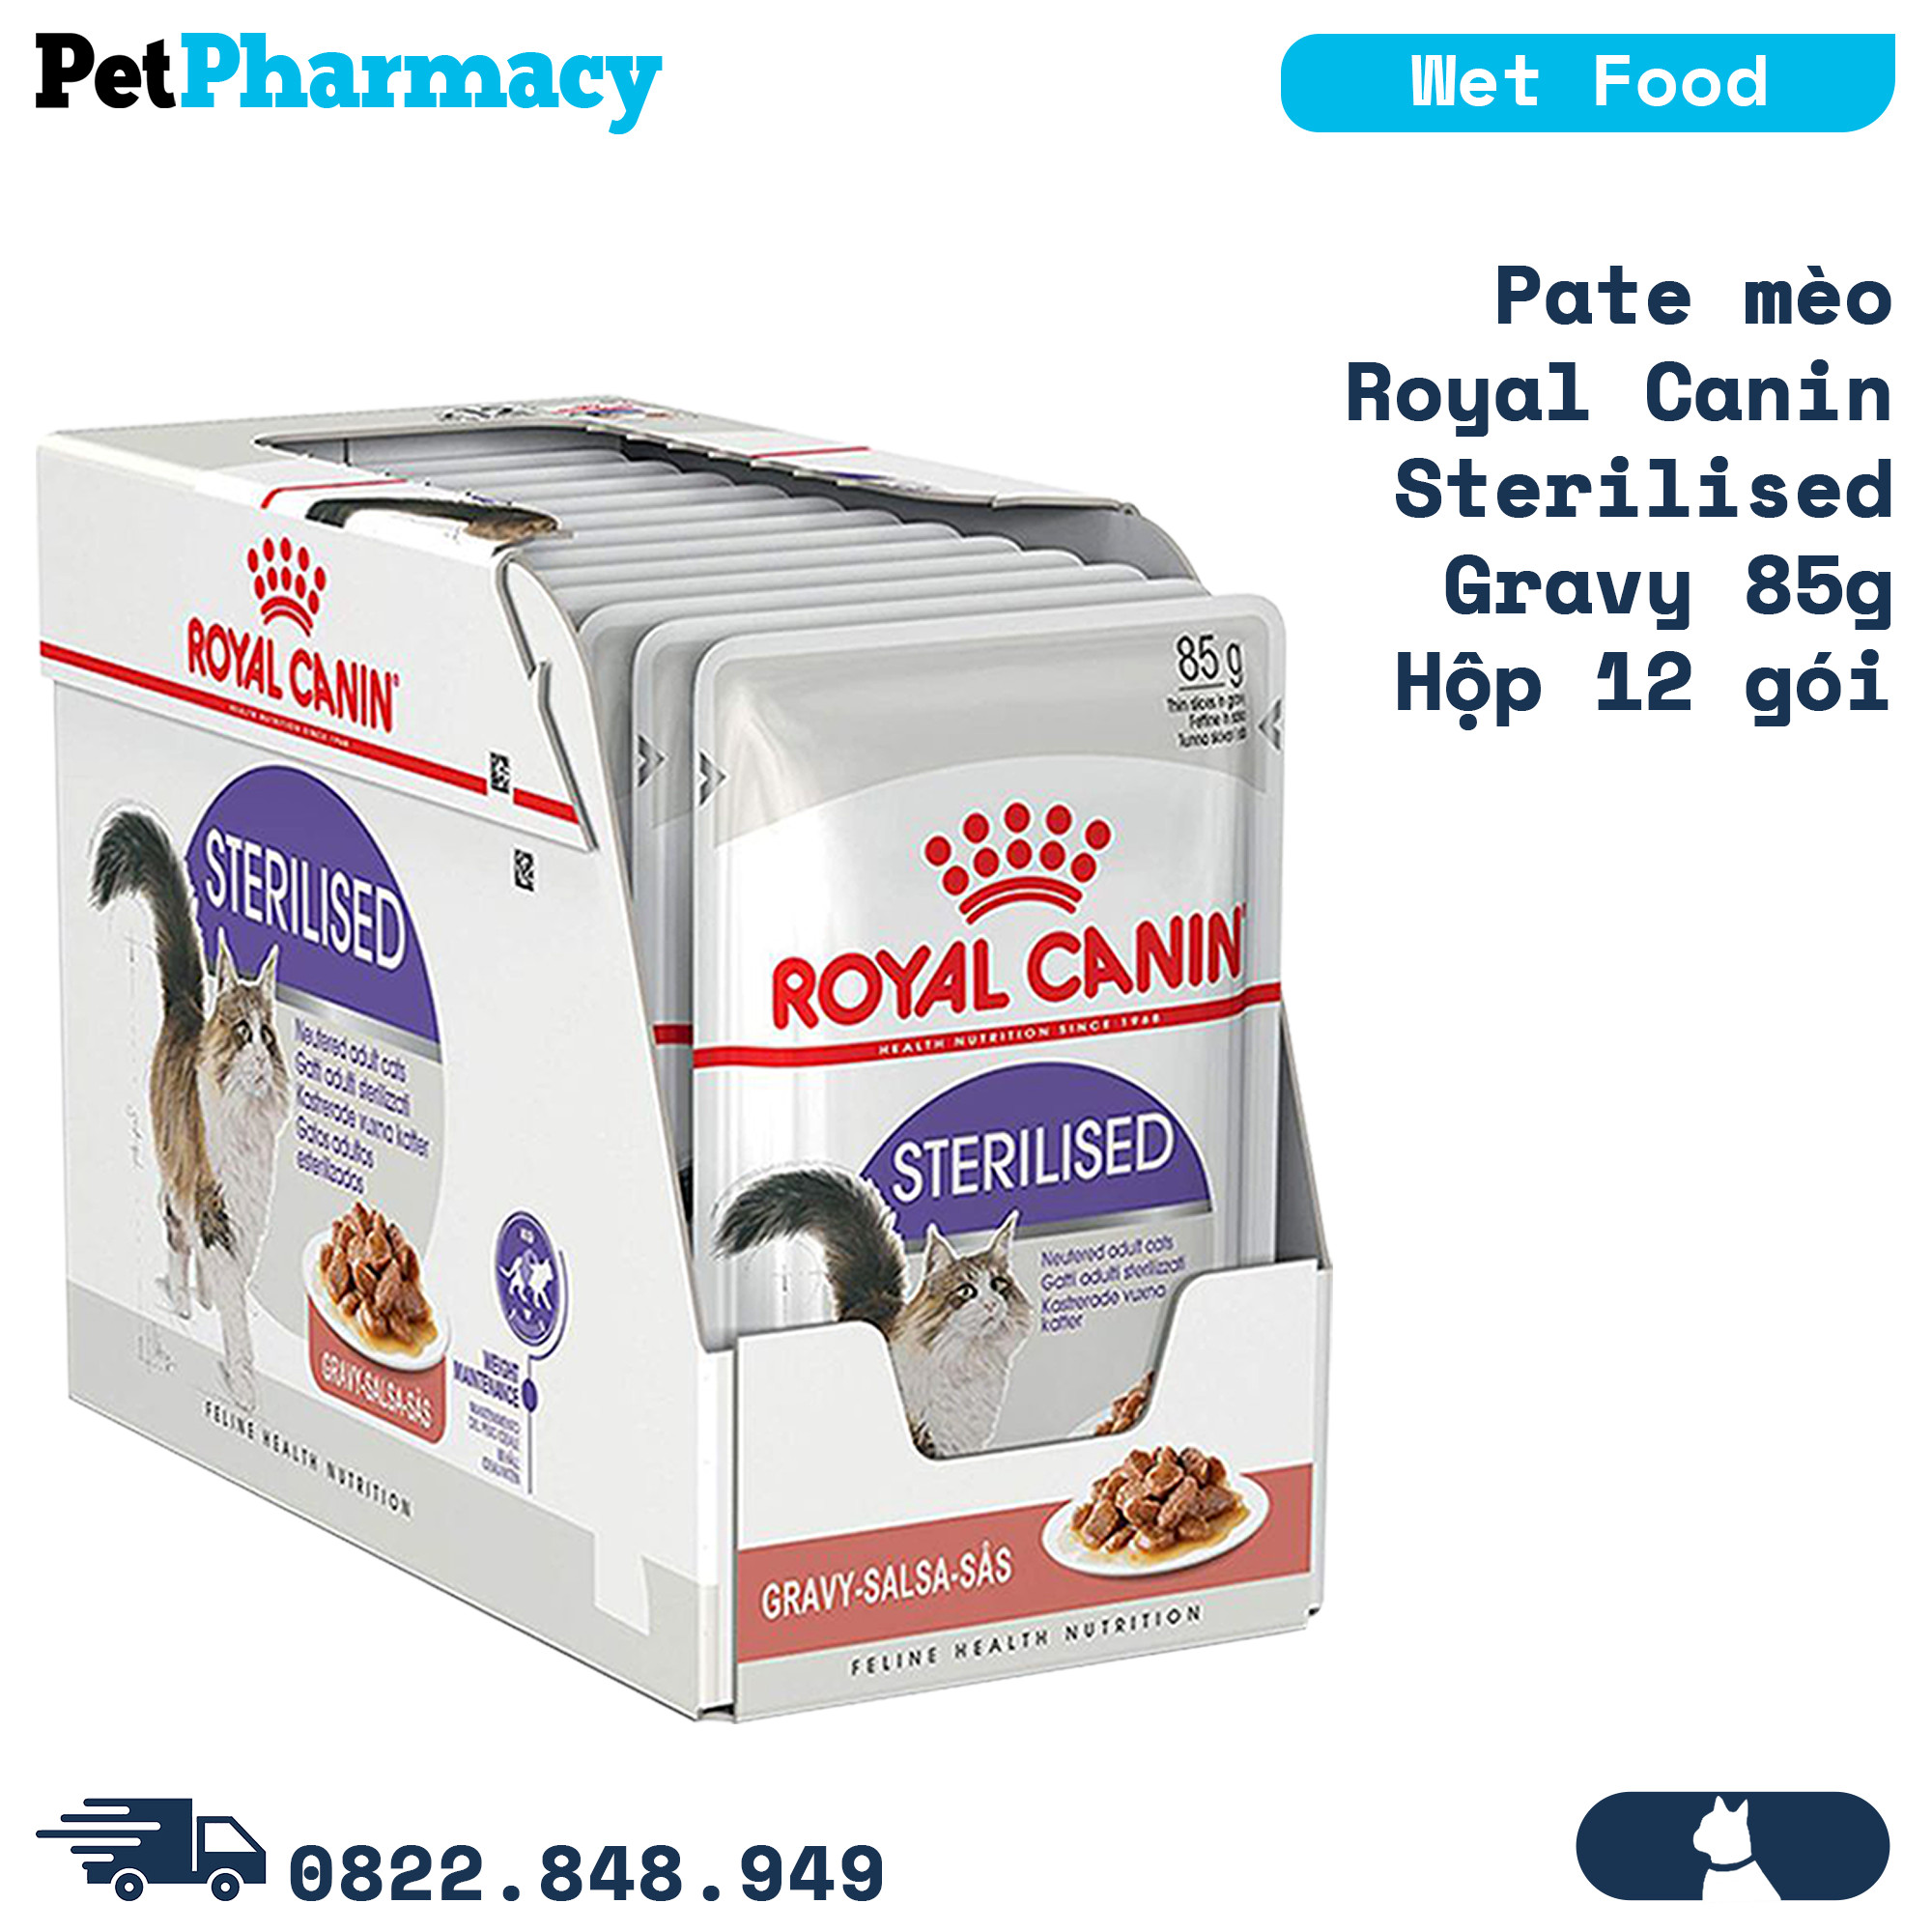 Pate mèo Royal Canin Sterilised Gravy 85g - Hộp 12 gói Petpharmacy